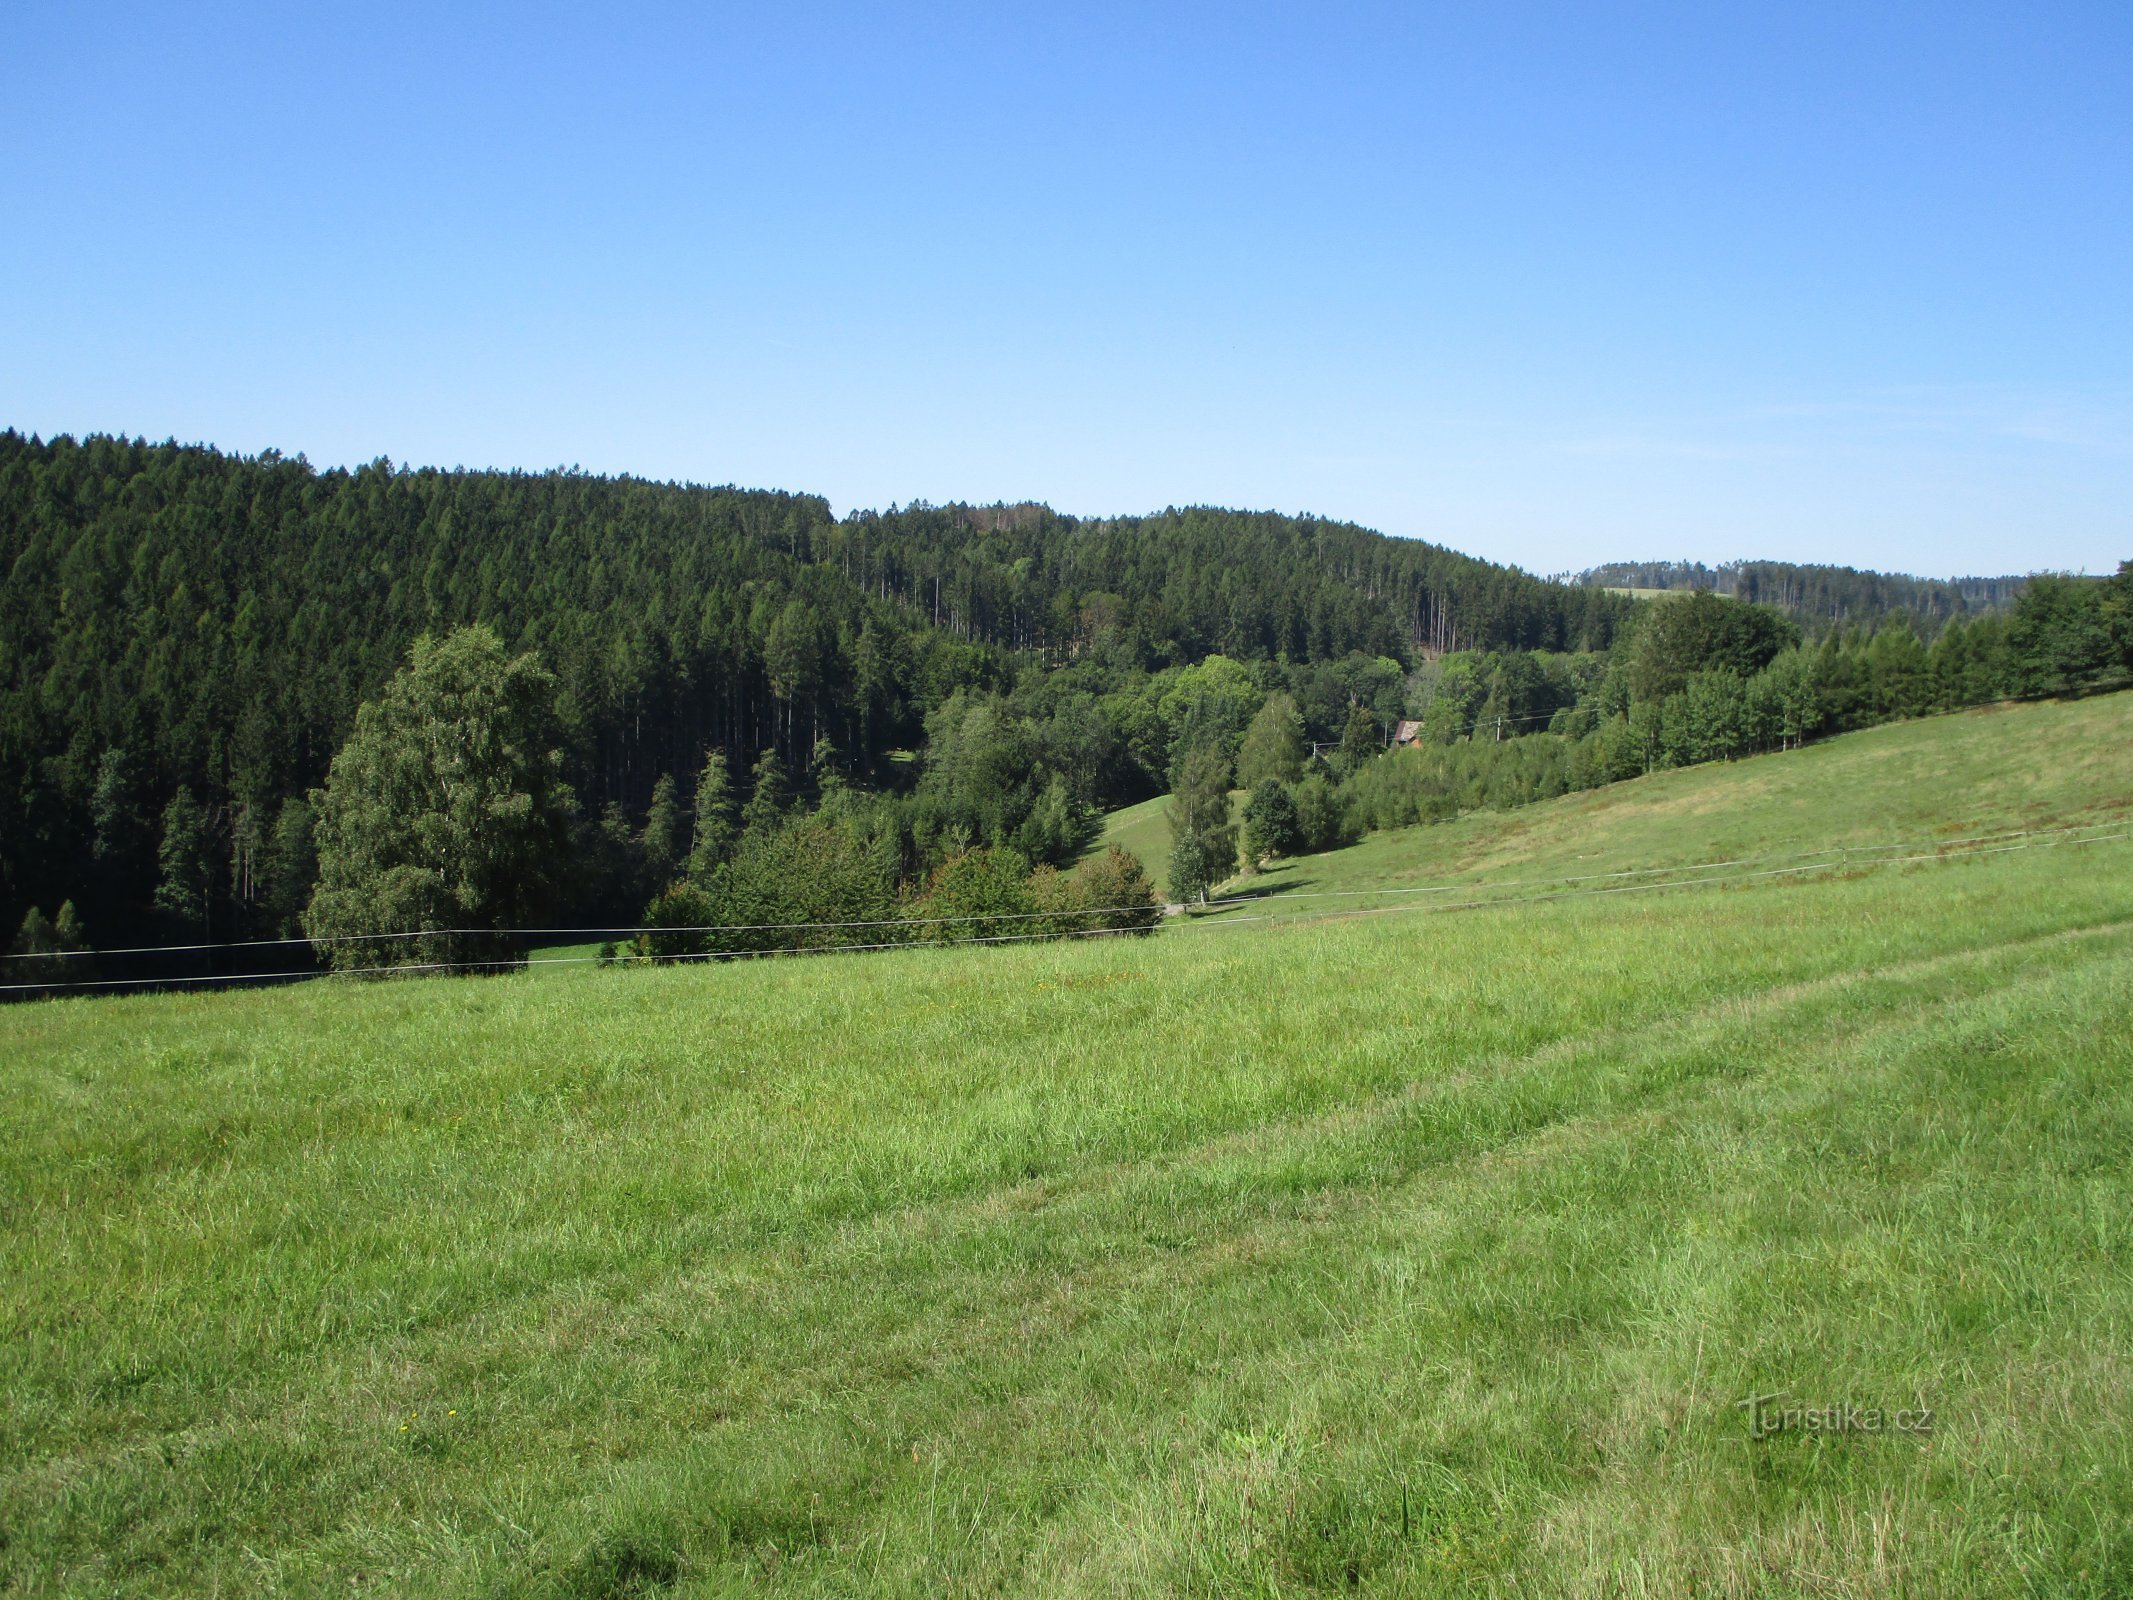 Harcovské údolí vanaf de weg van Brzice naar Běluň (4.9.2019 september XNUMX)